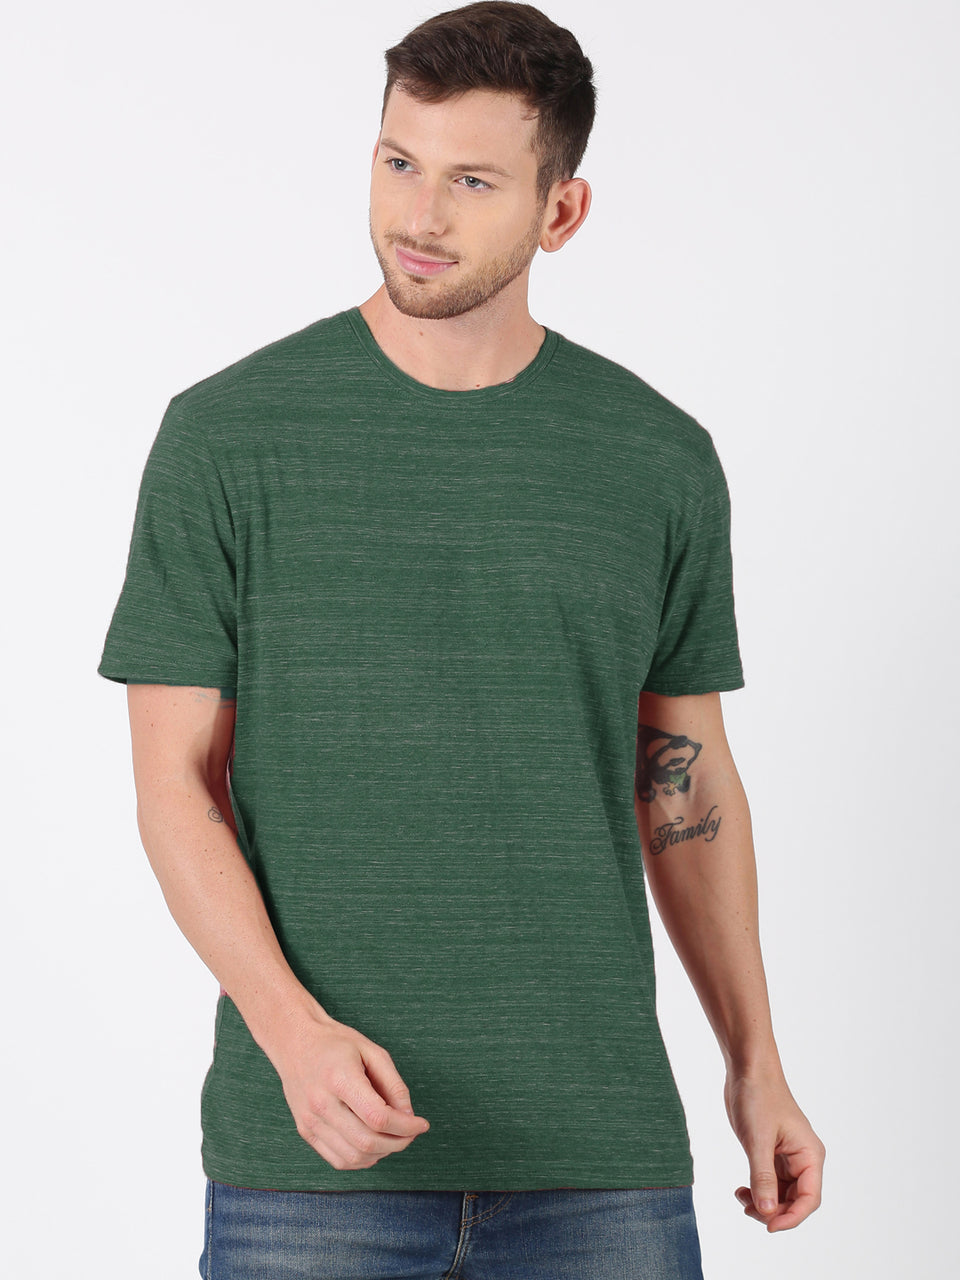 Buy Half Sleeves Crew Neck T Shirts: Grey Melange Online